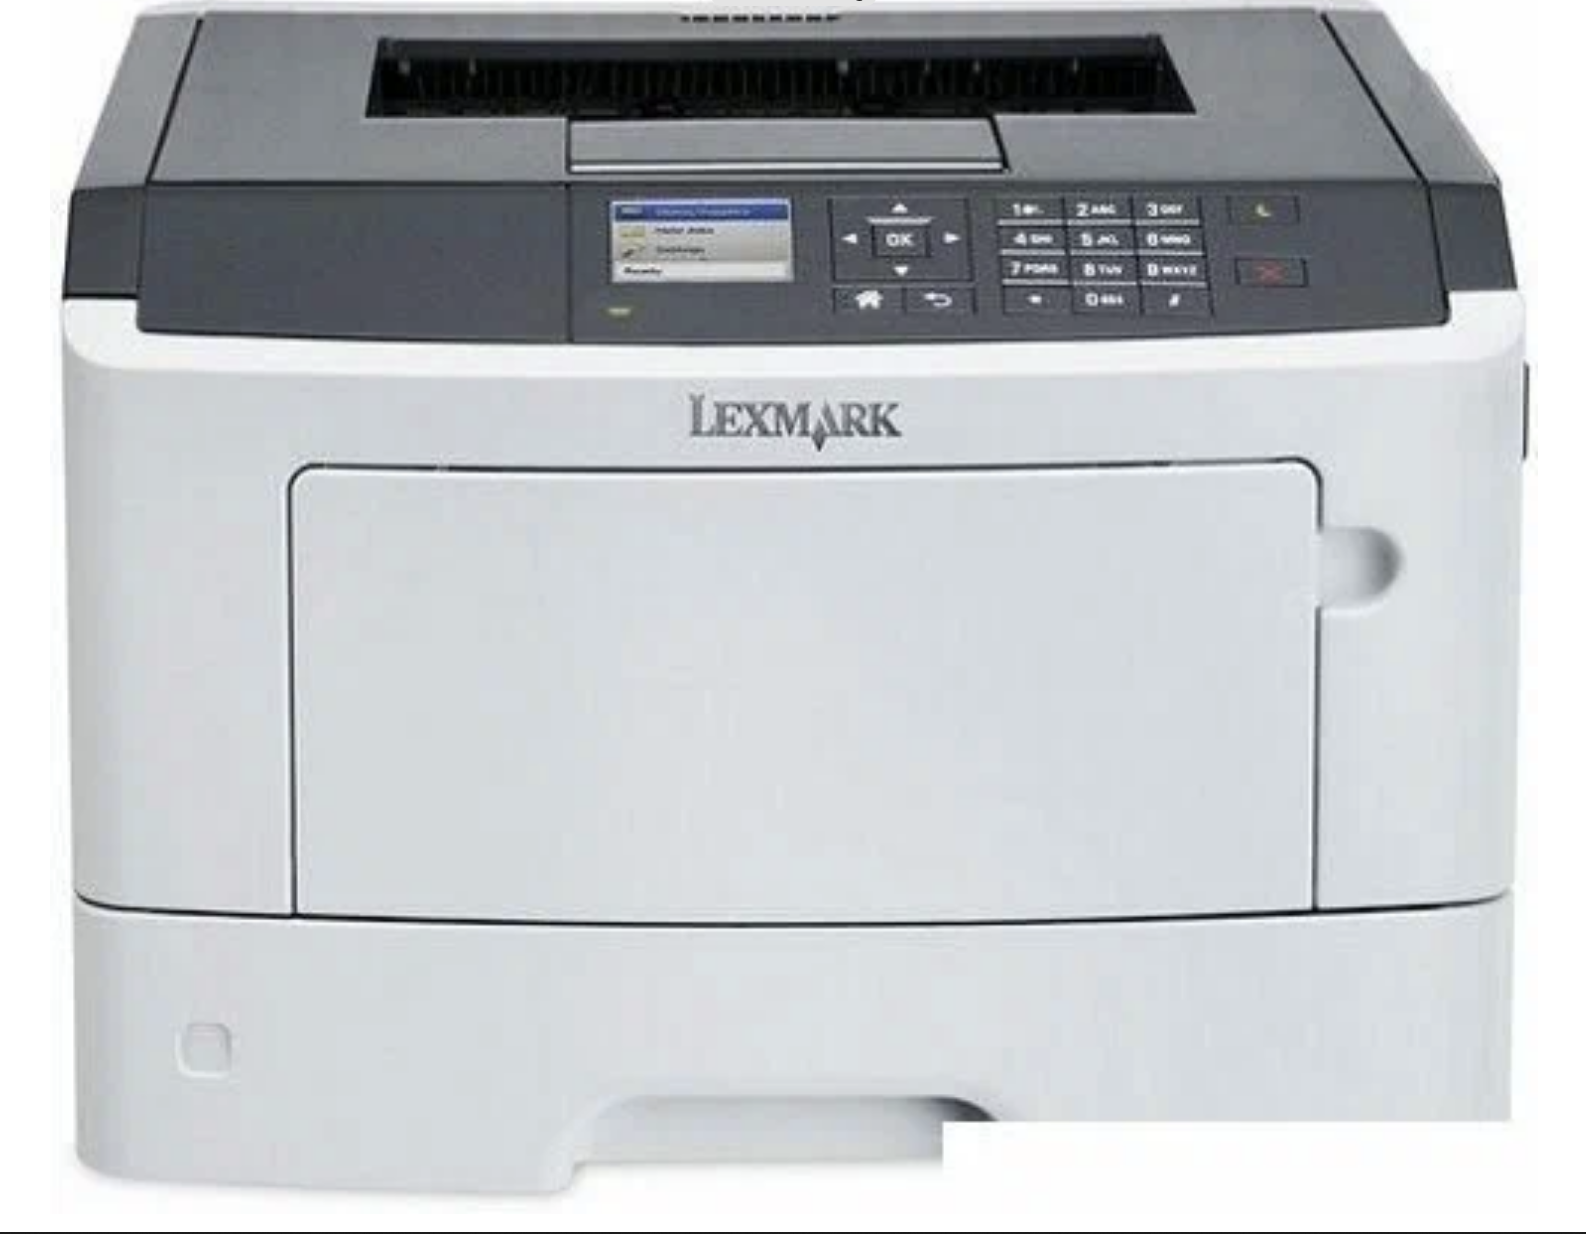 Принтер лазерный Lexmark MS510dn, ч/б, A4, белый/серый